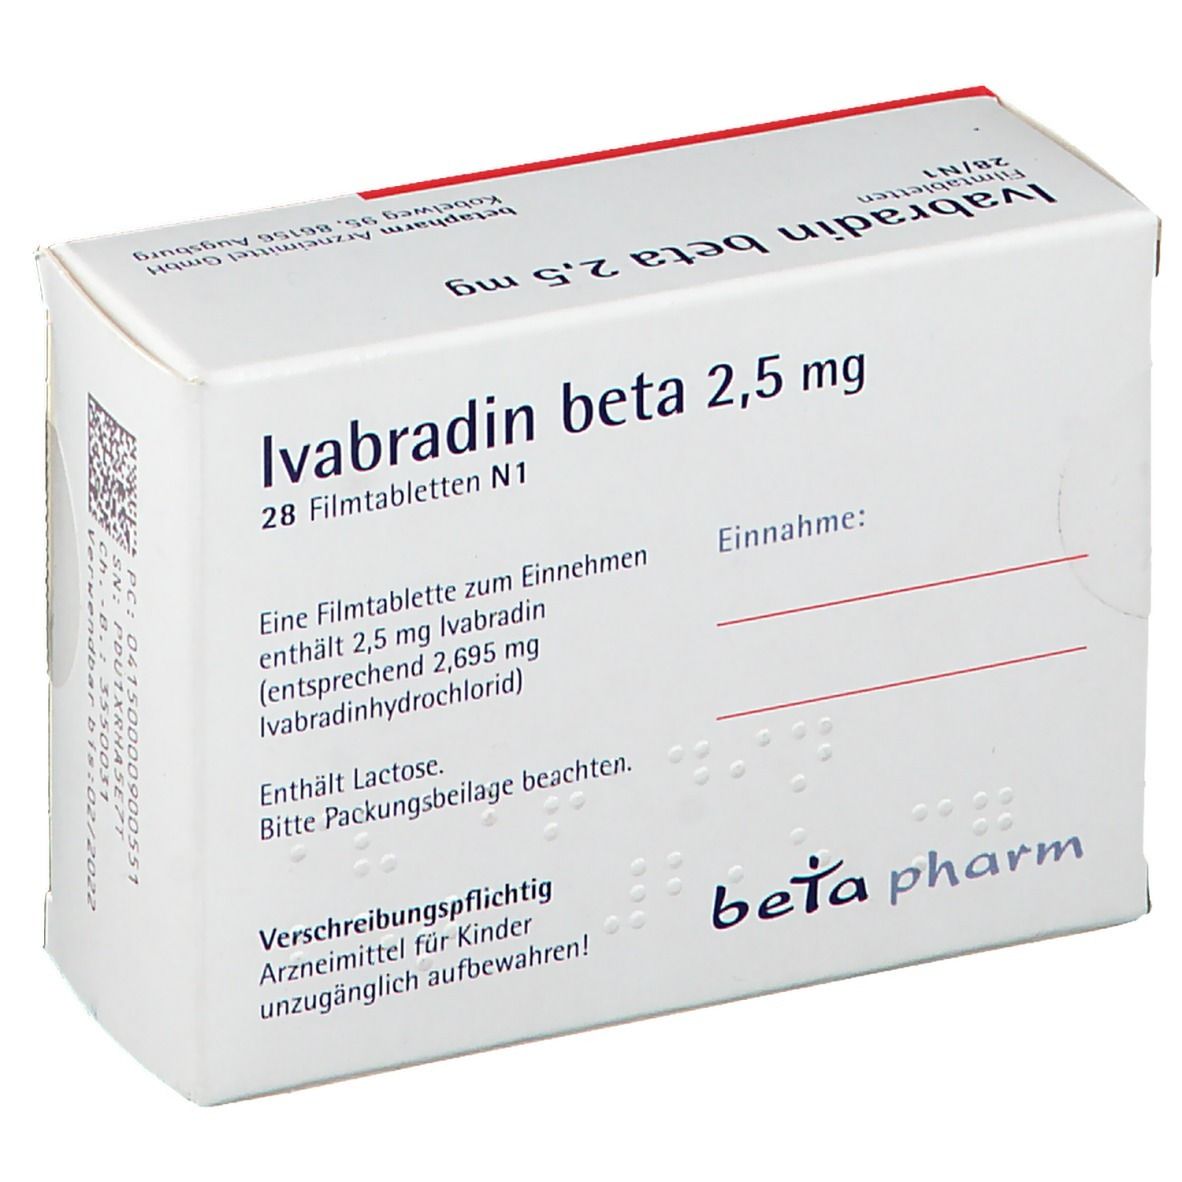 Ivabradin beta 2,5 mg